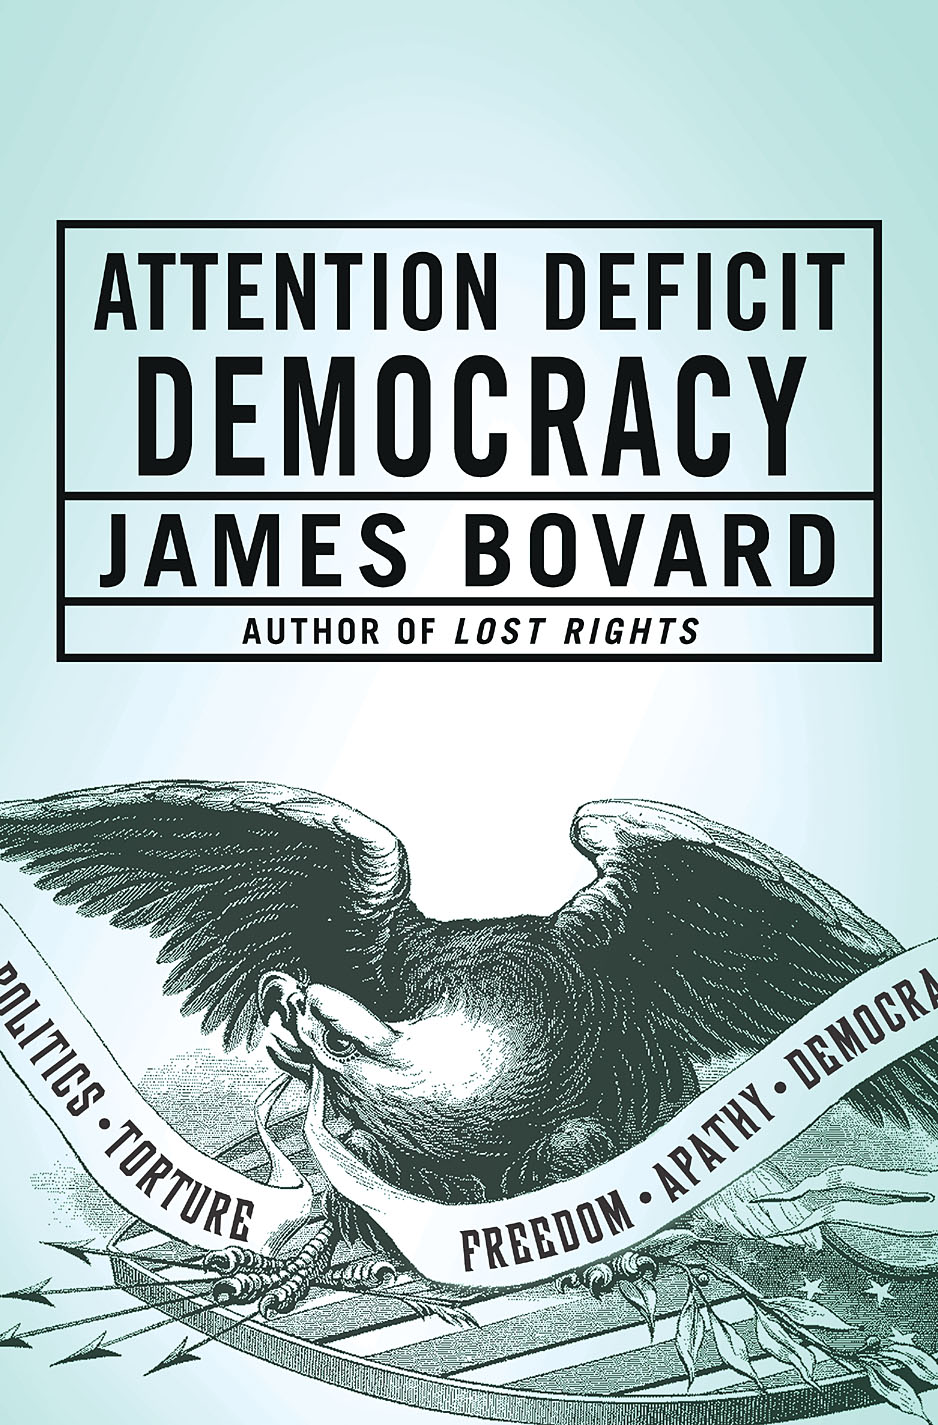 http://www.jimbovard.com/attention%20deficit%20democracy.jpg